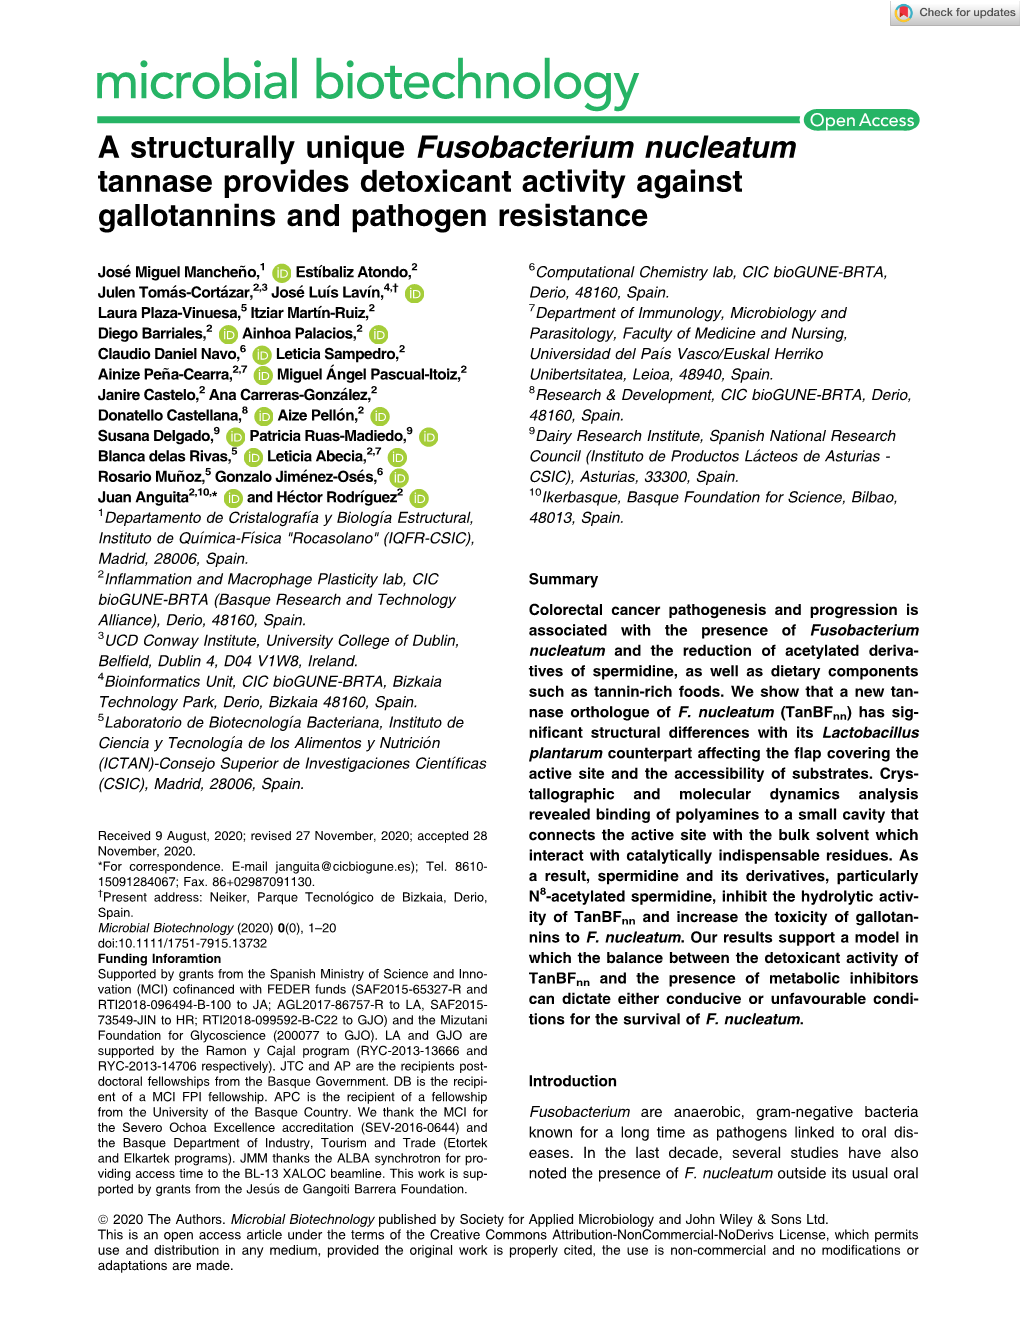 A Structurally Unique Fusobacterium Nucleatum Tannase Provides Detoxicant Activity Against Gallotannins and Pathogen Resistance